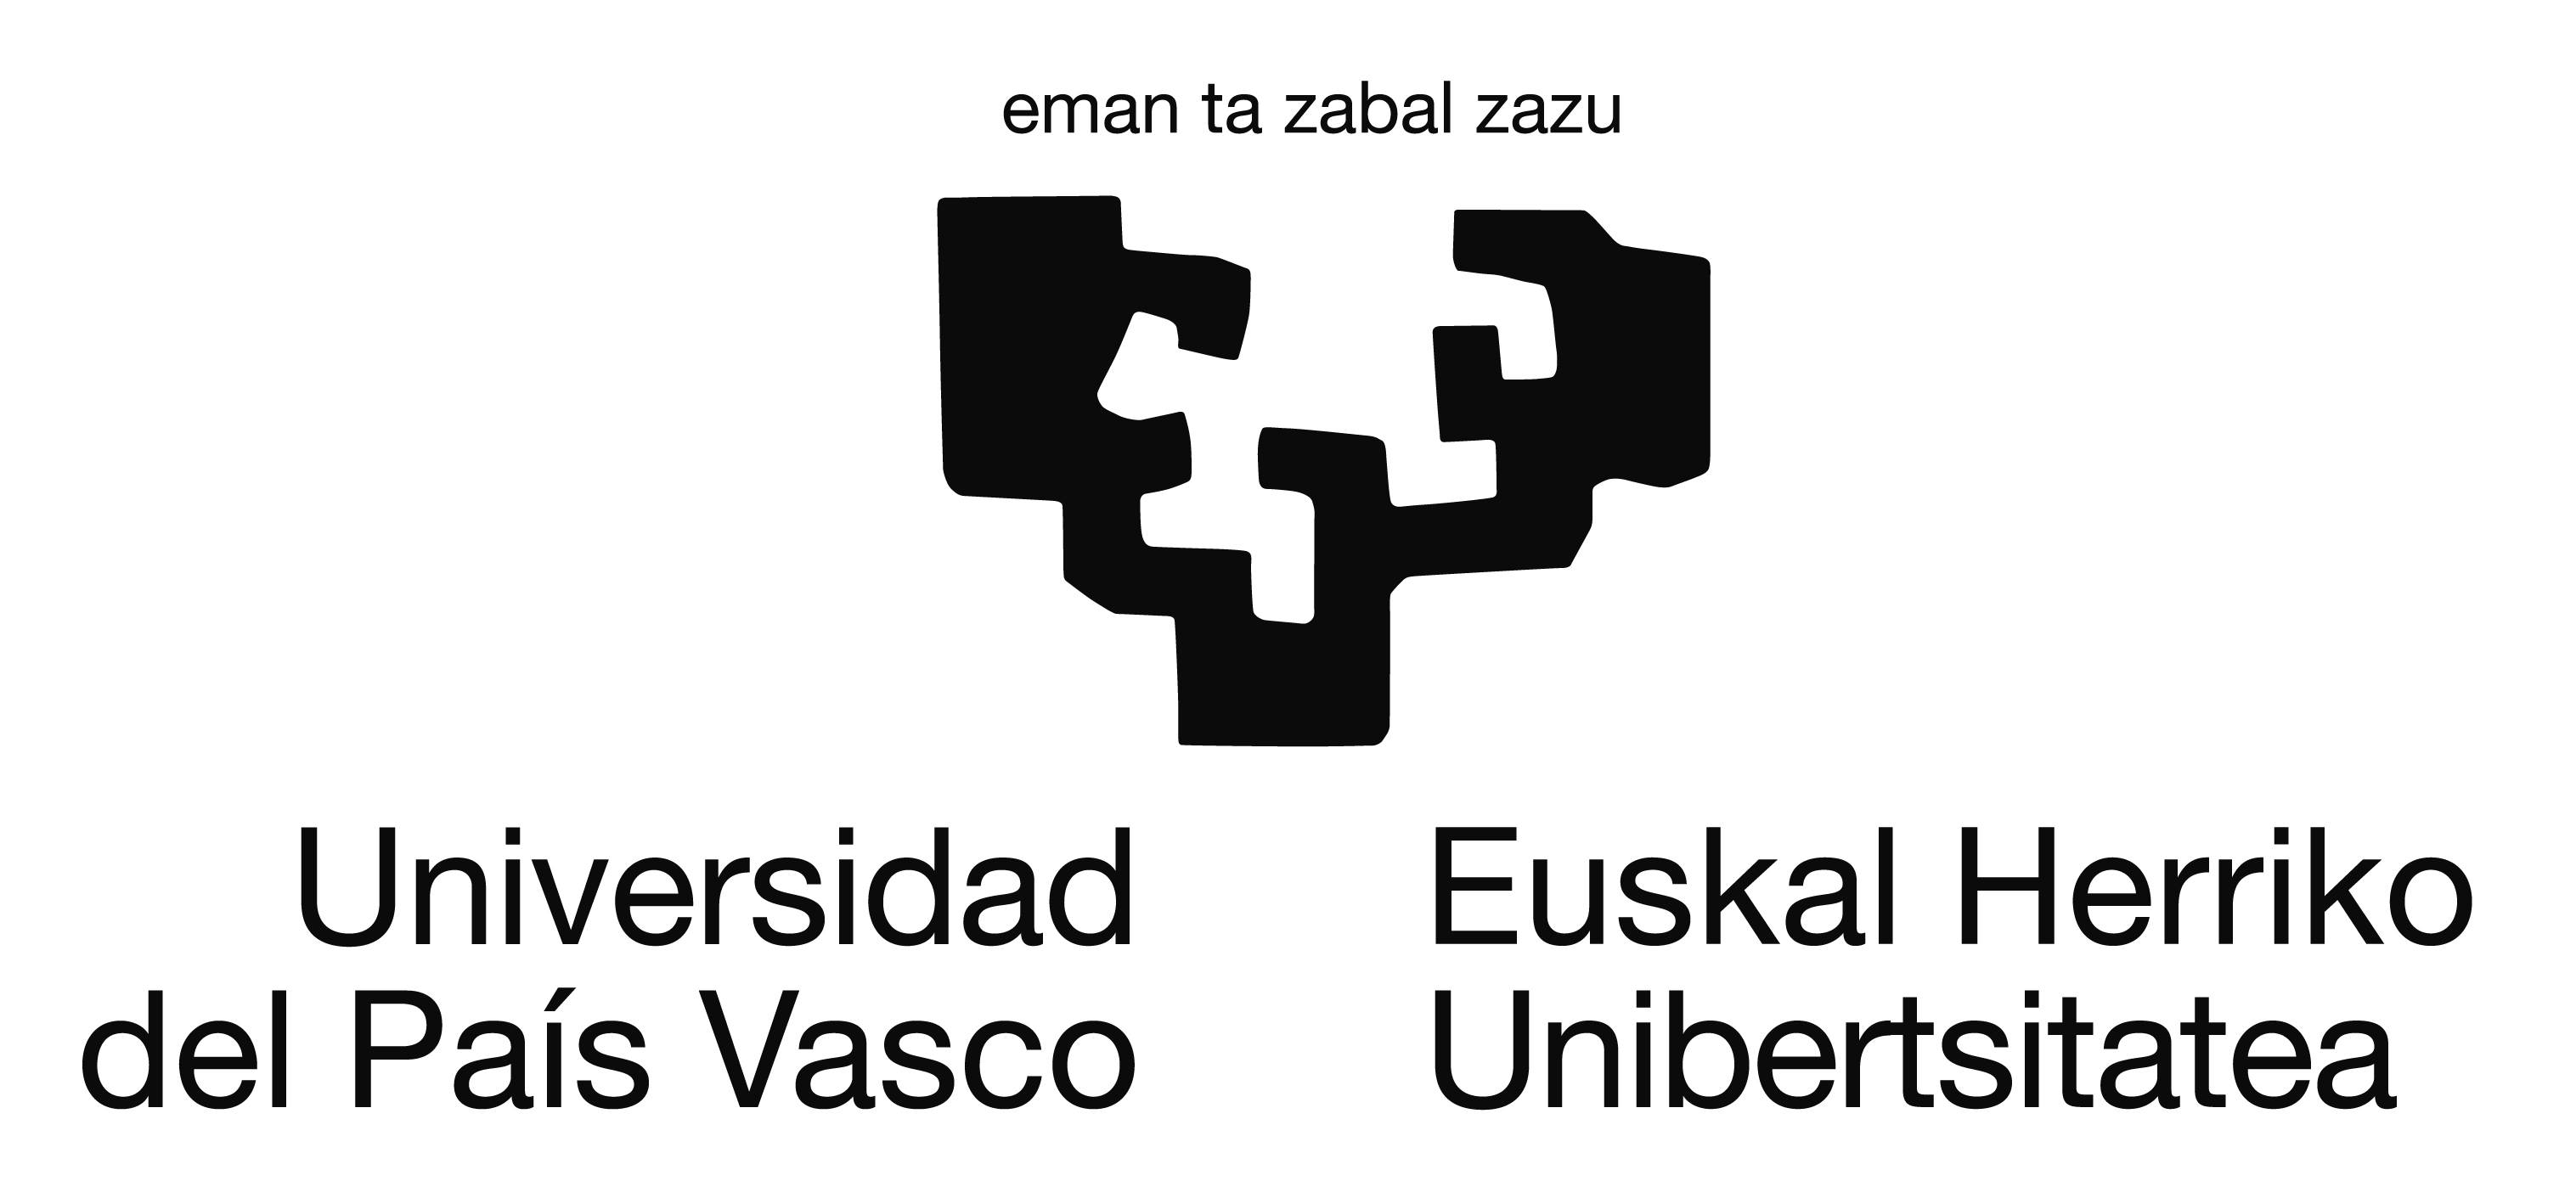 El símbolo creado por Chillida, con el texto eman ta zabal zazu encima y Universidad del País Vasco Euskal Herriko Unibertsitatea debajo